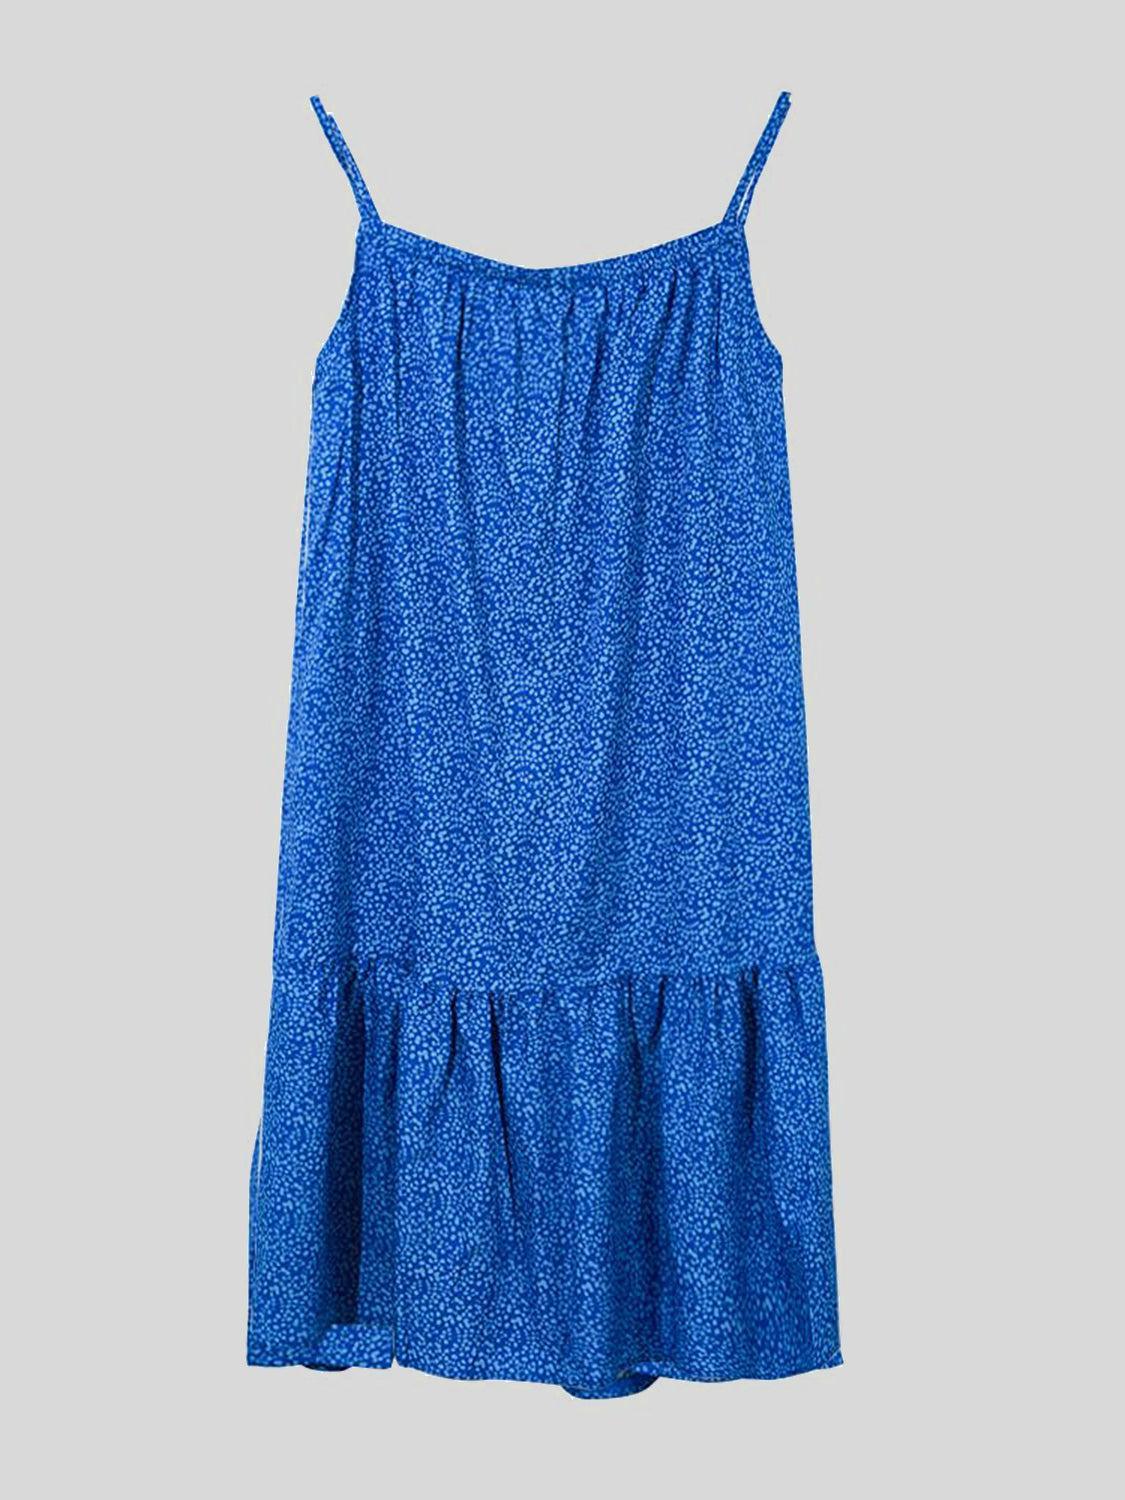 a blue dress with a ruffled hem